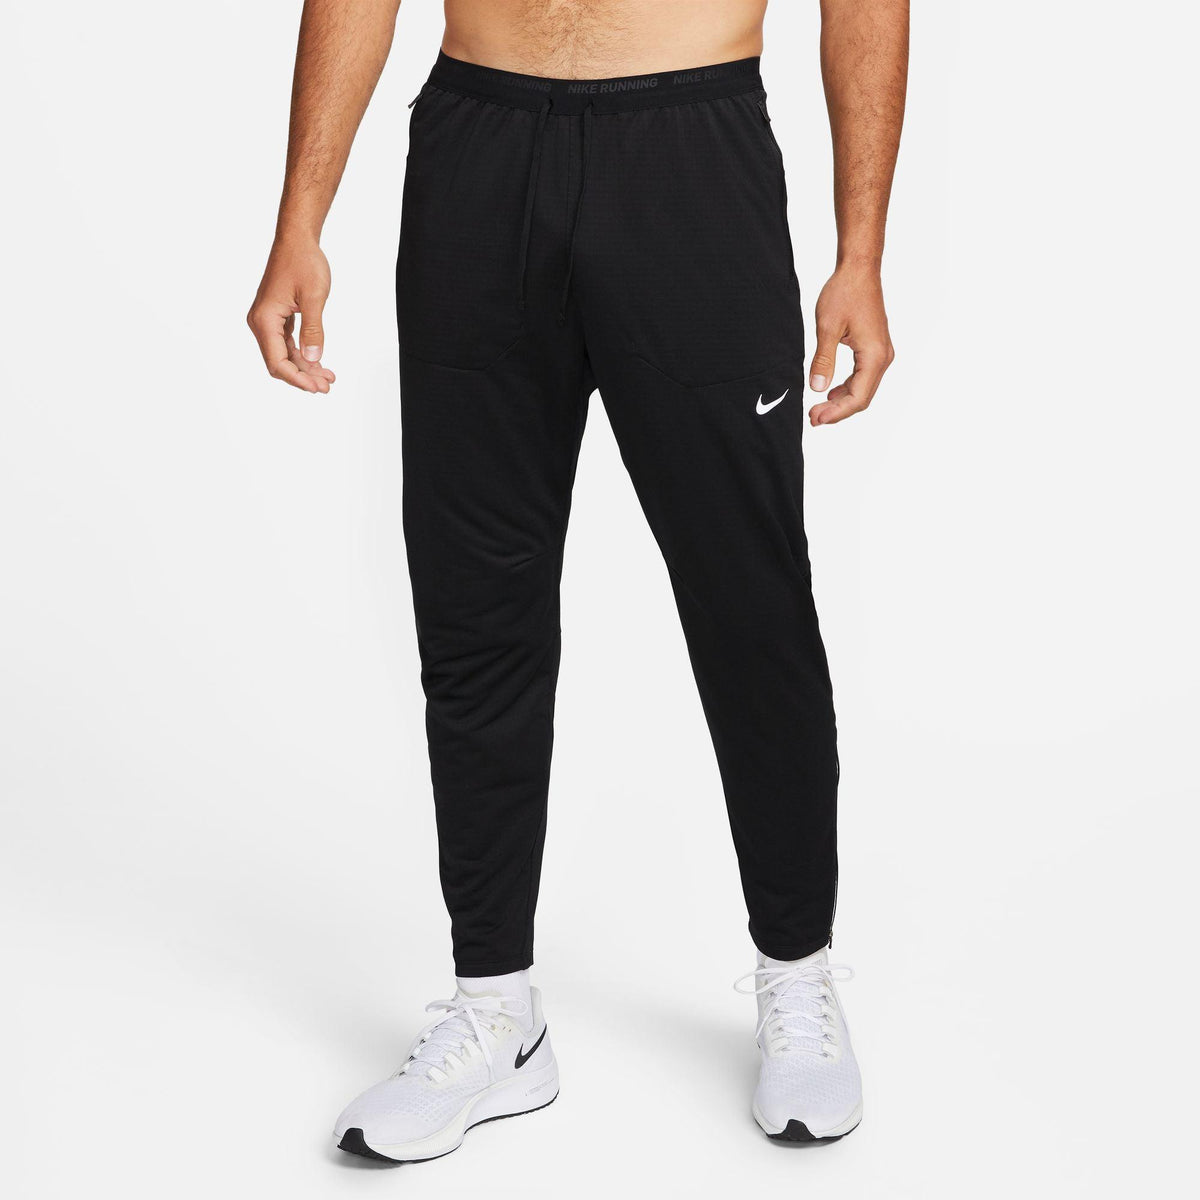 Nike-Men's Nike Phenom-Black/Reflective Silv-Pacers Running